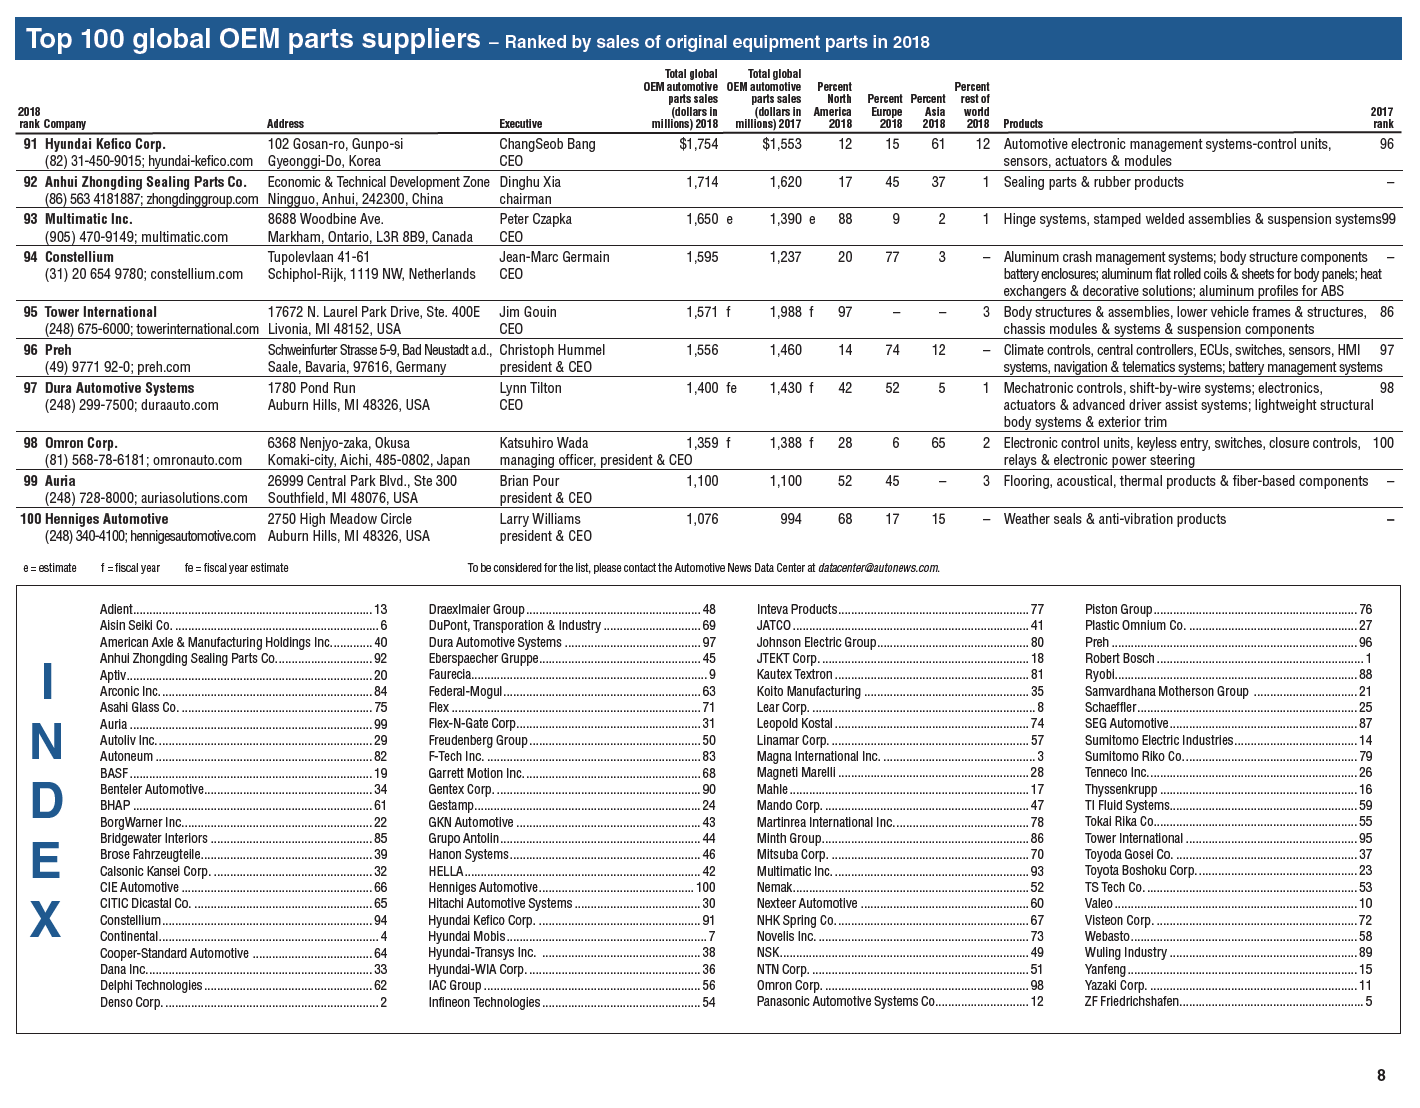 Udvalg klint fordøjelse The Top 100 Global Auto Parts Suppliers: Chart | TopForeignStocks.com